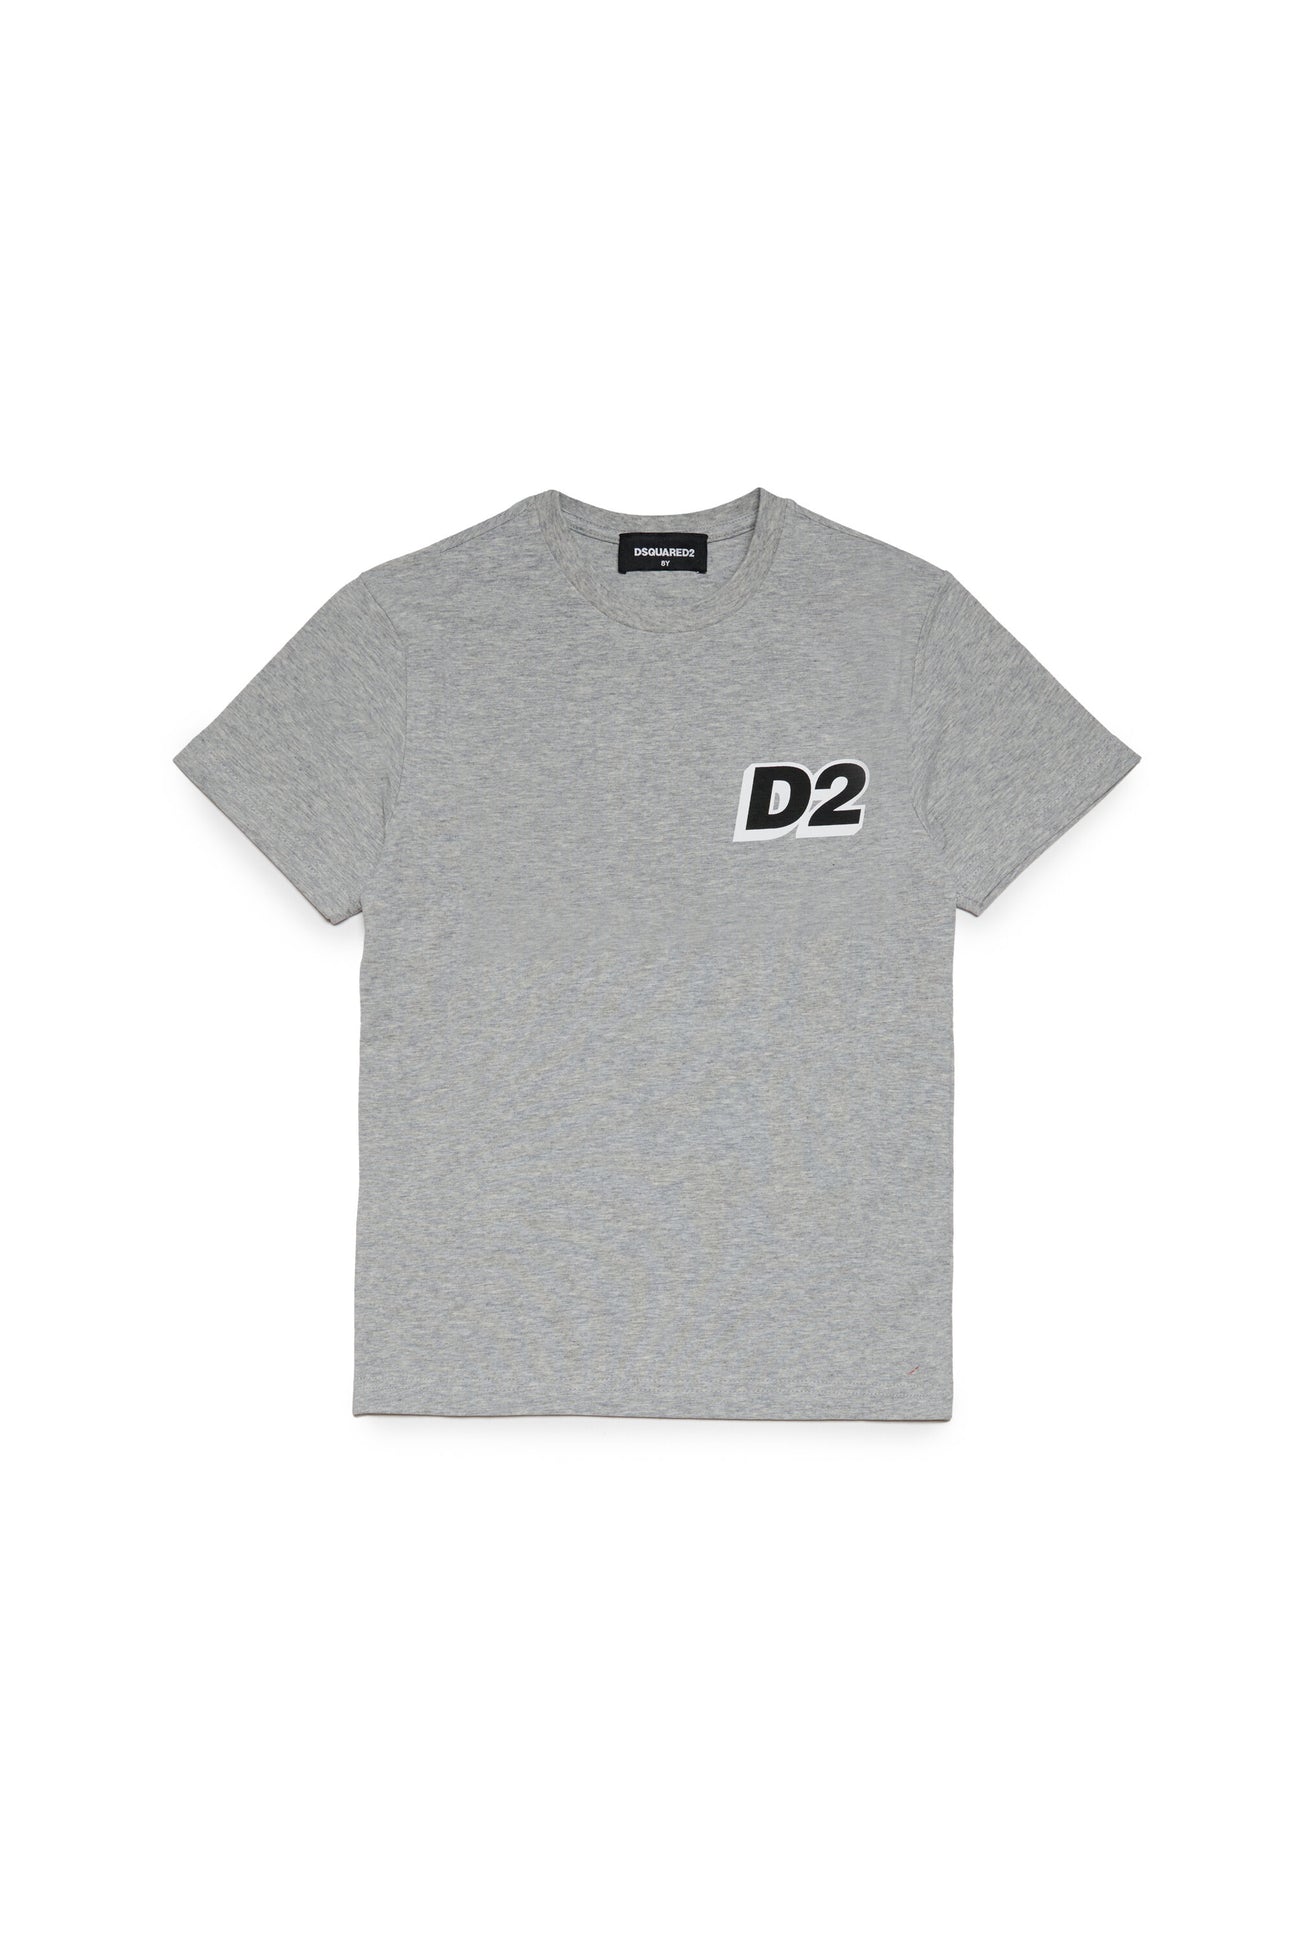 Mélange jersey loungewear t-shirt with D2 logo 